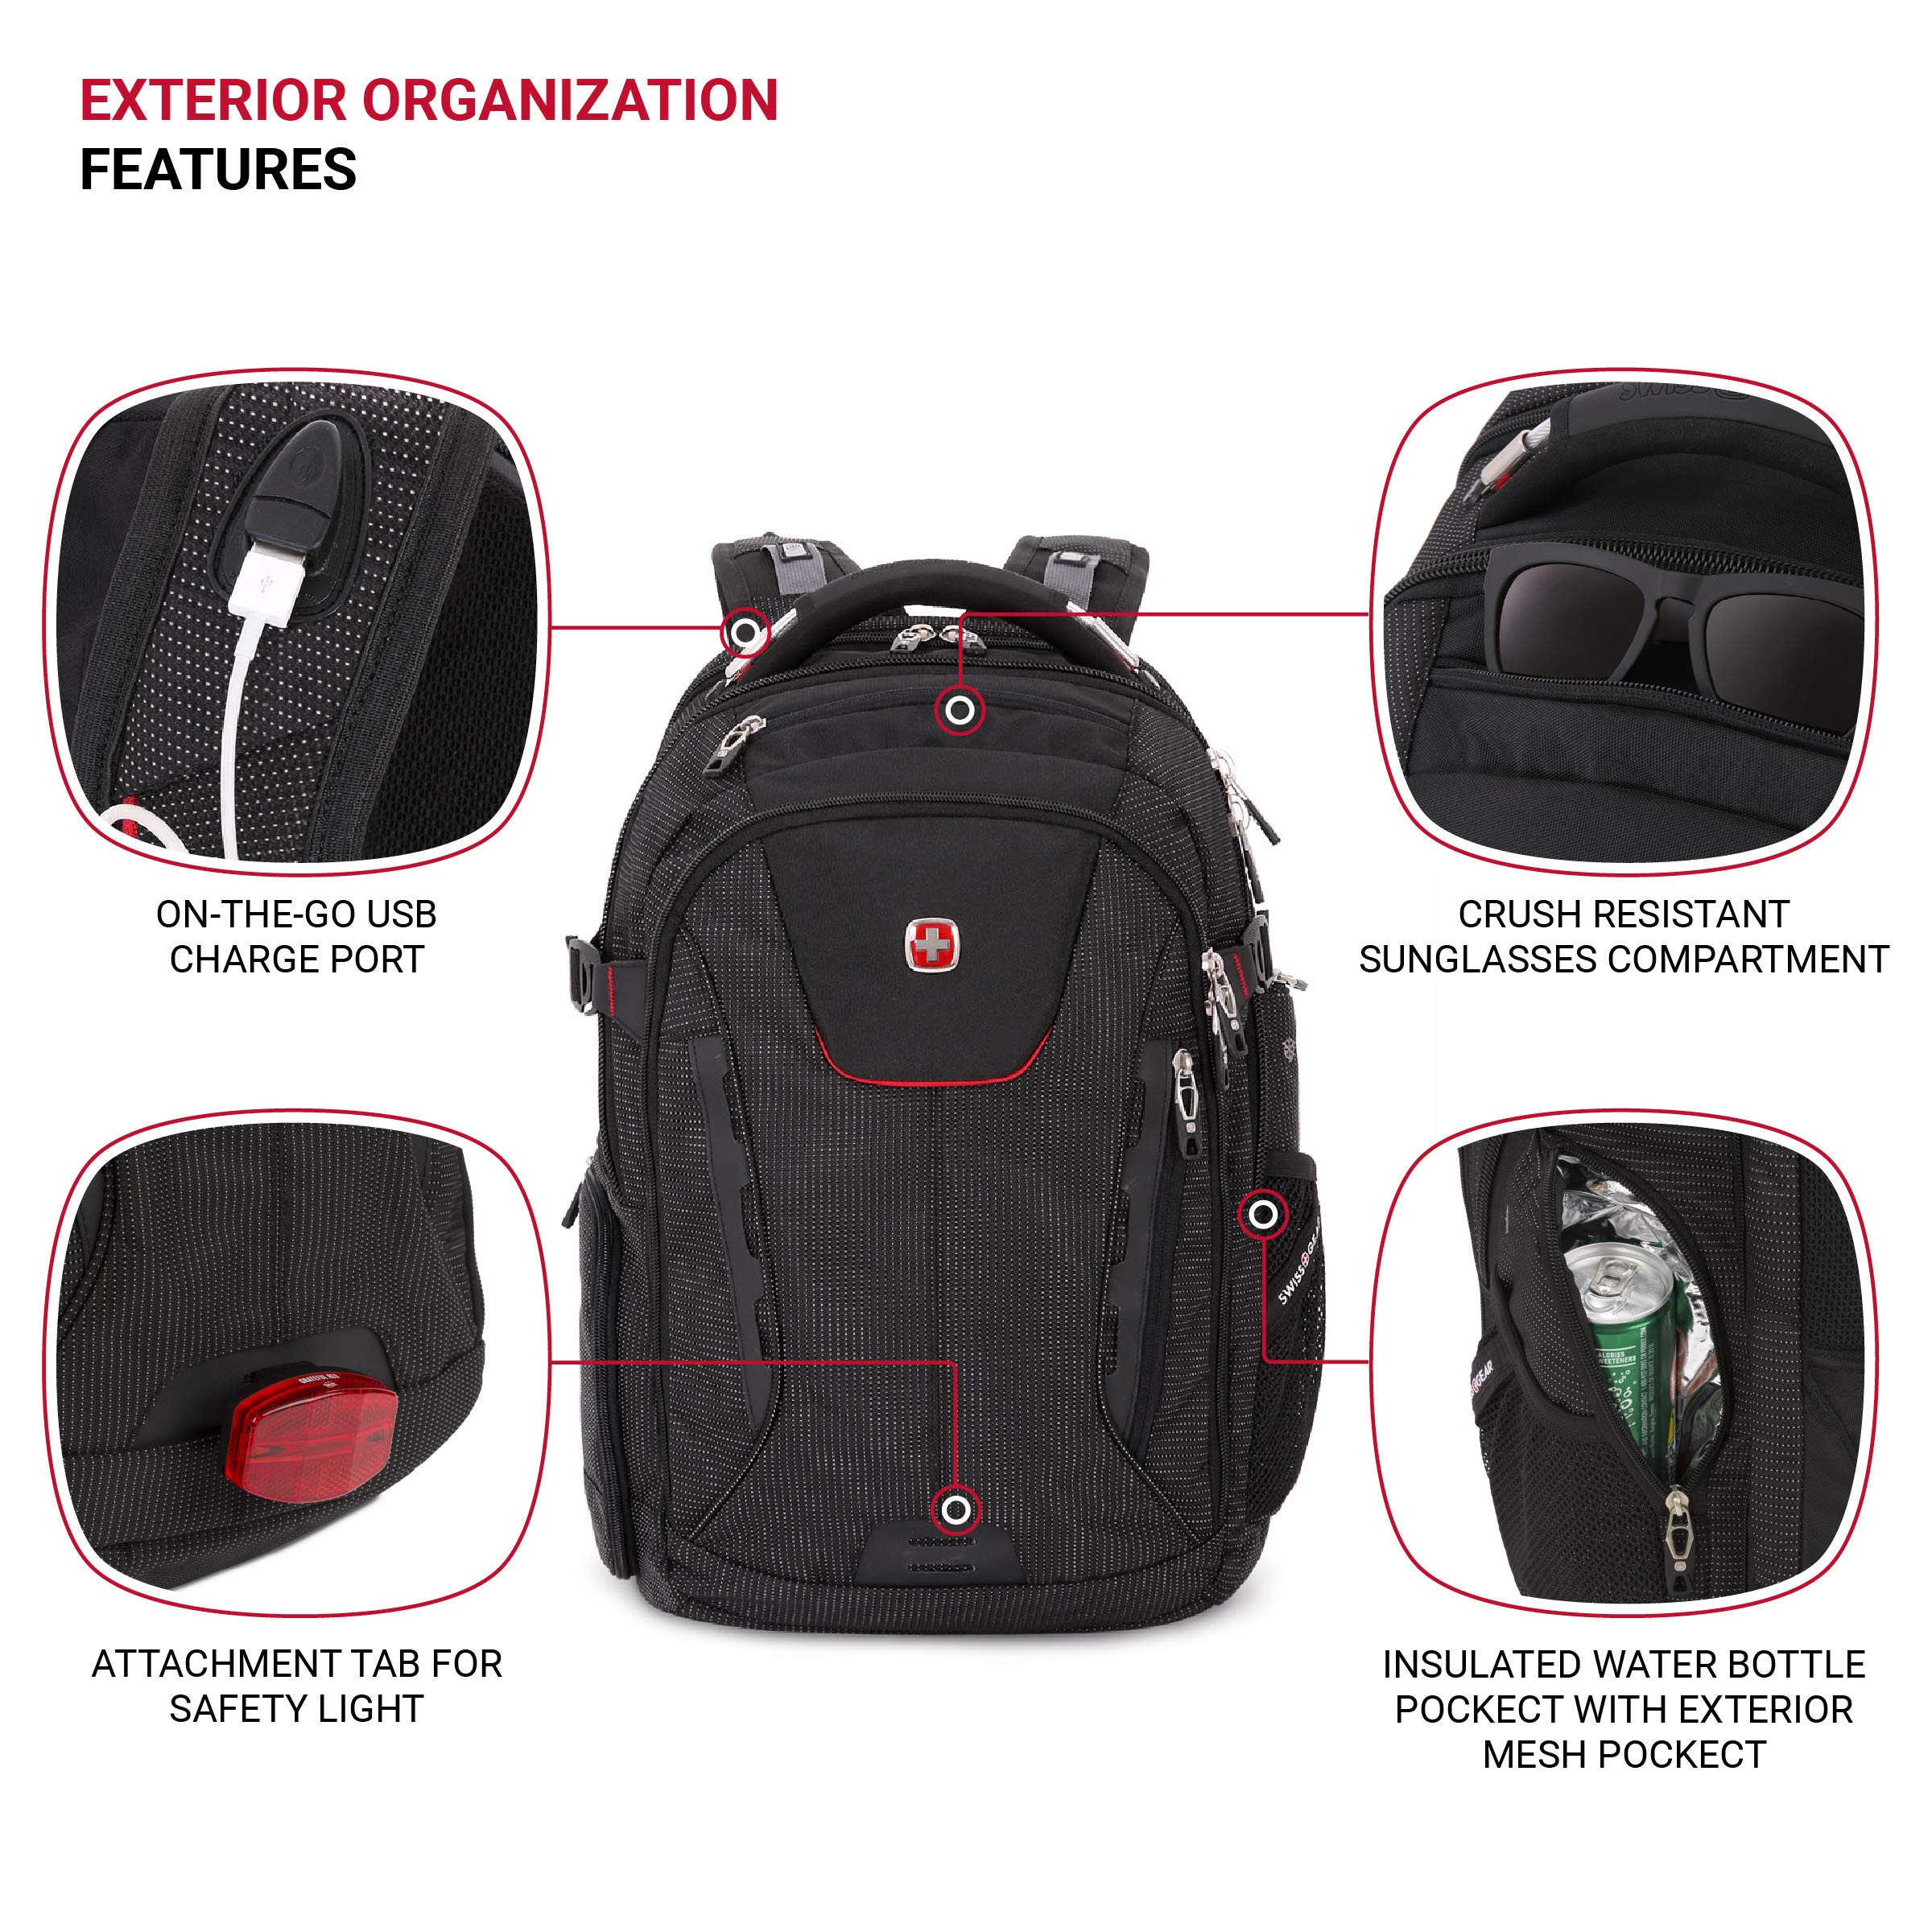 SwissGear 5358 USB ScanSmart Laptop Backpack, Dark Grey, Large